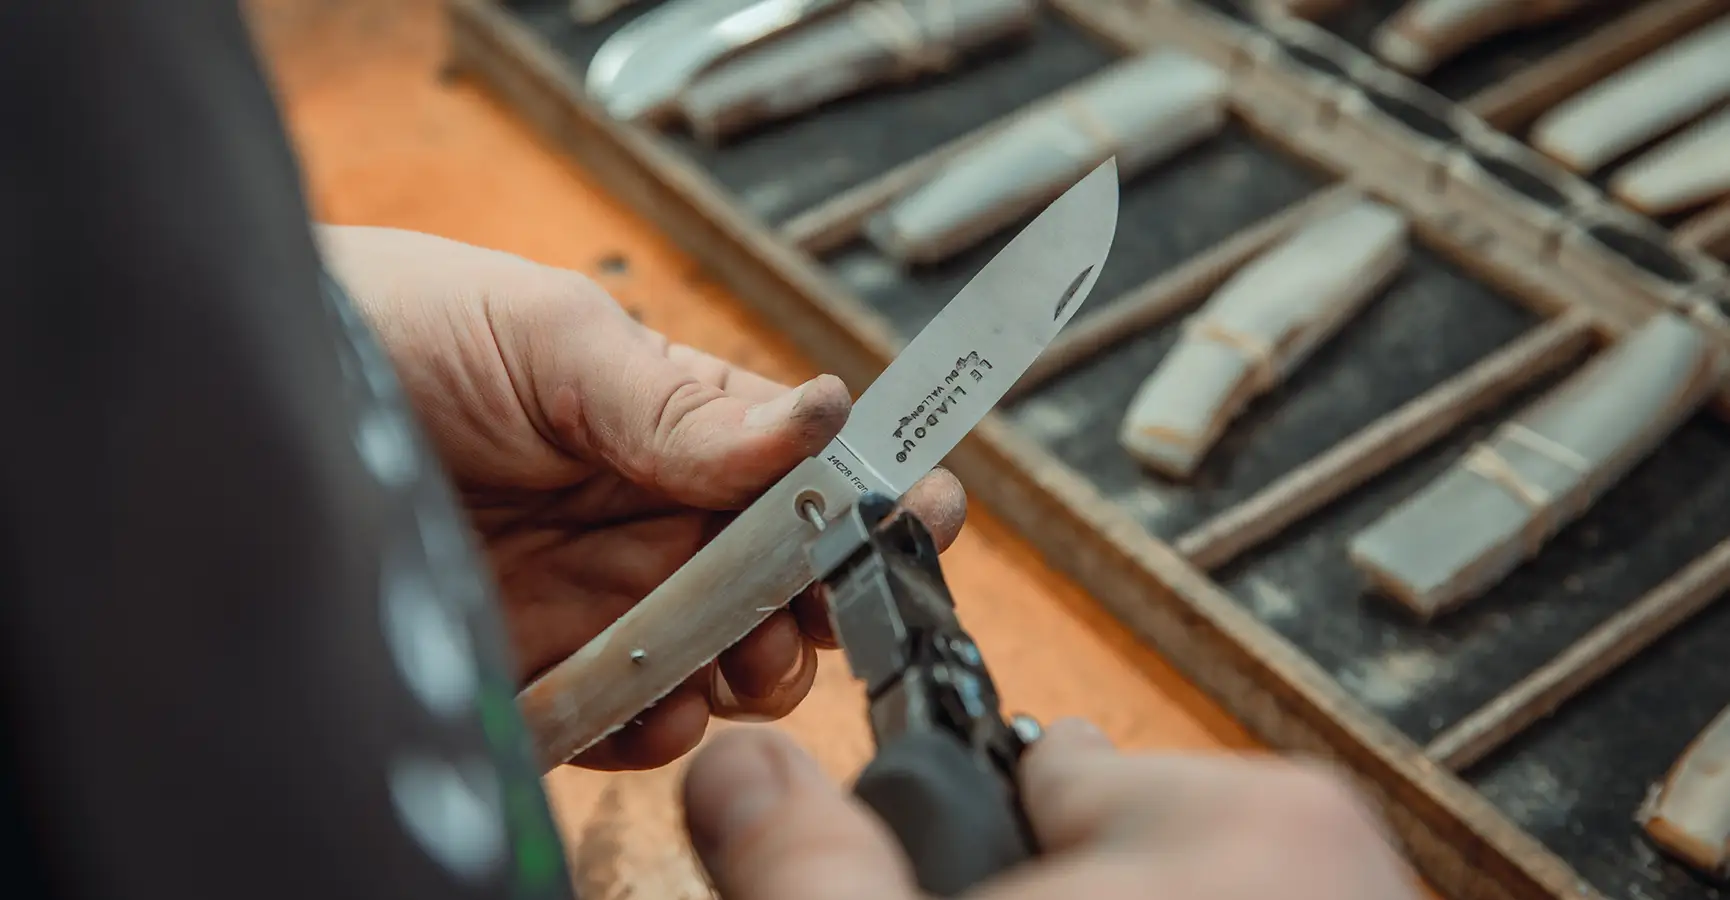 A French pocket knife <i>“Made In Aveyron“</i>